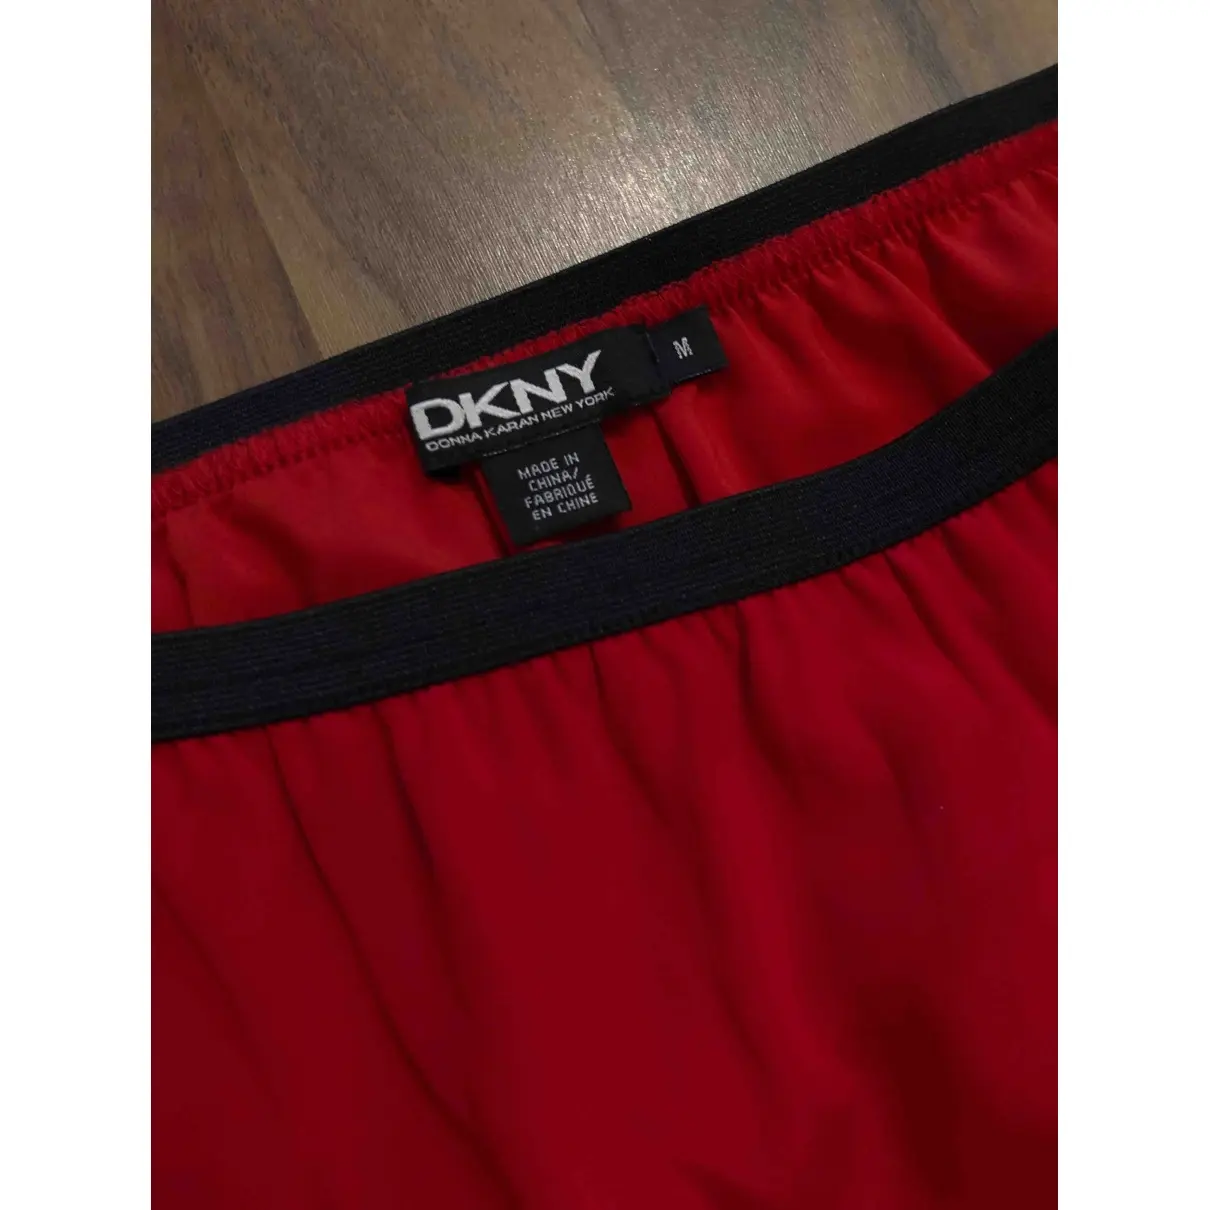 Buy Dkny Silk mid-length skirt online